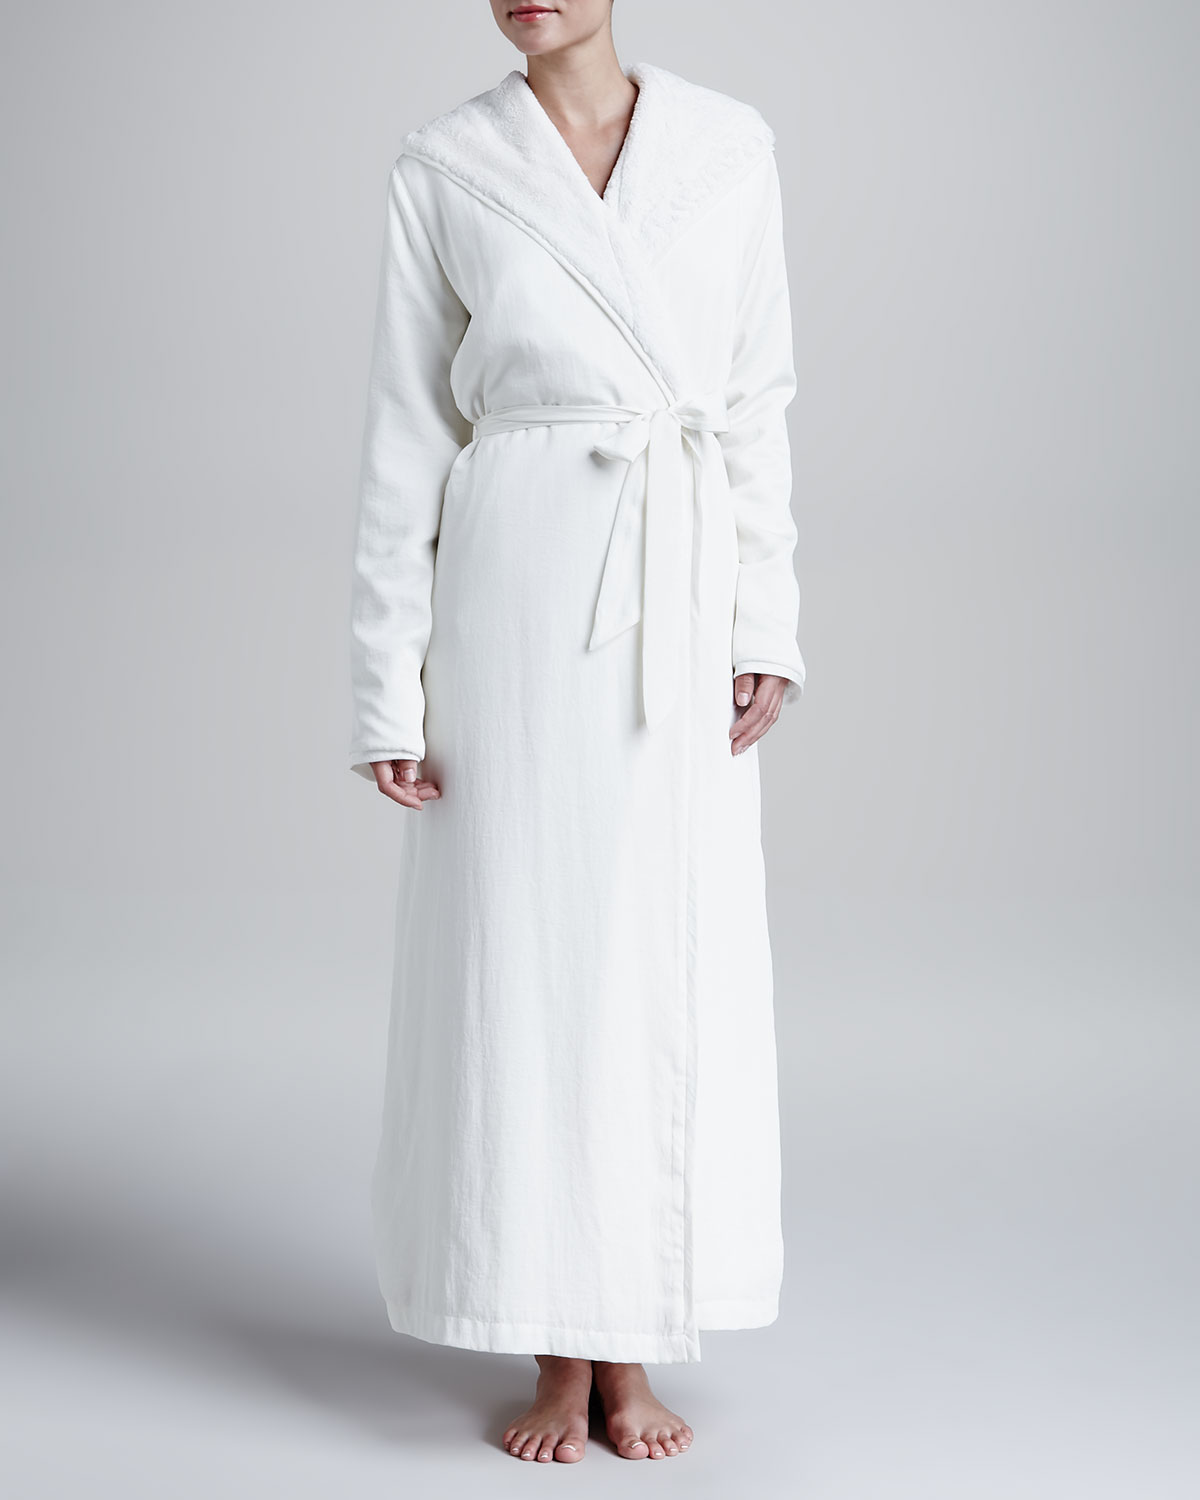 Lyst - Donna karan Laundered Satin Fauxfur Robe White in White